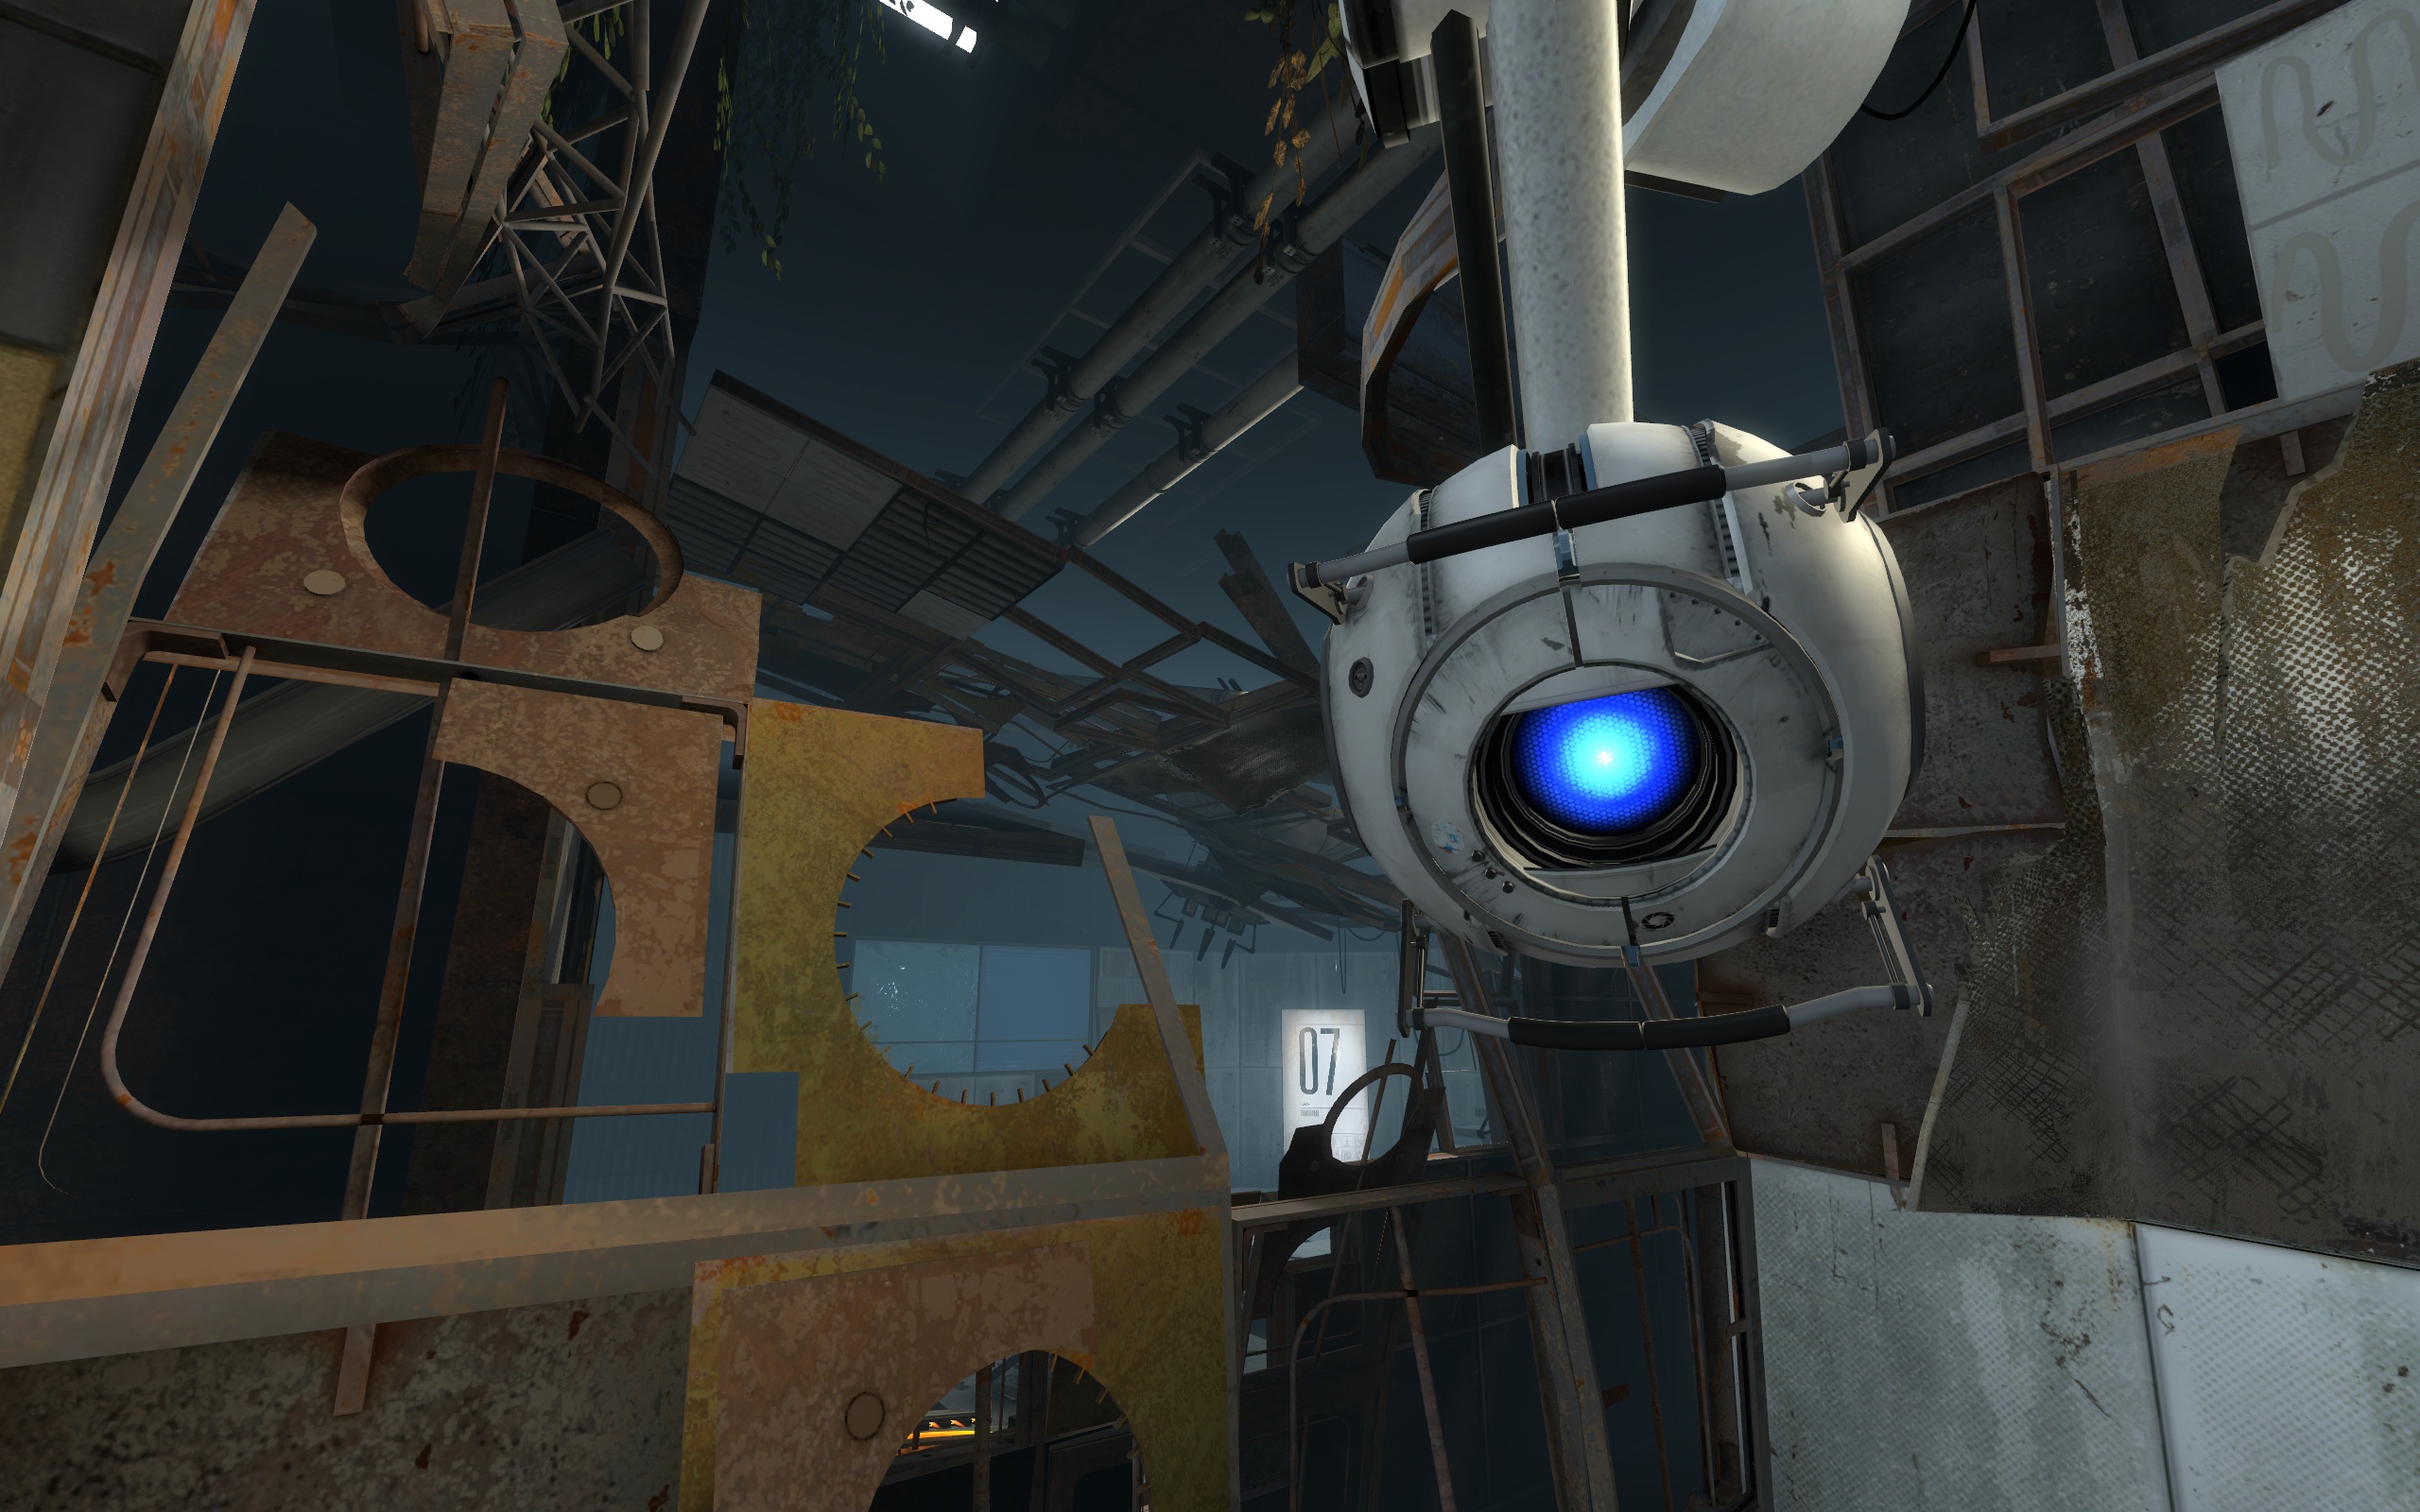 Б г портал. Portal 2. Portal 2 робот Уитли. Уитли Portal 2 игрушка. Portal 2 screenshots.